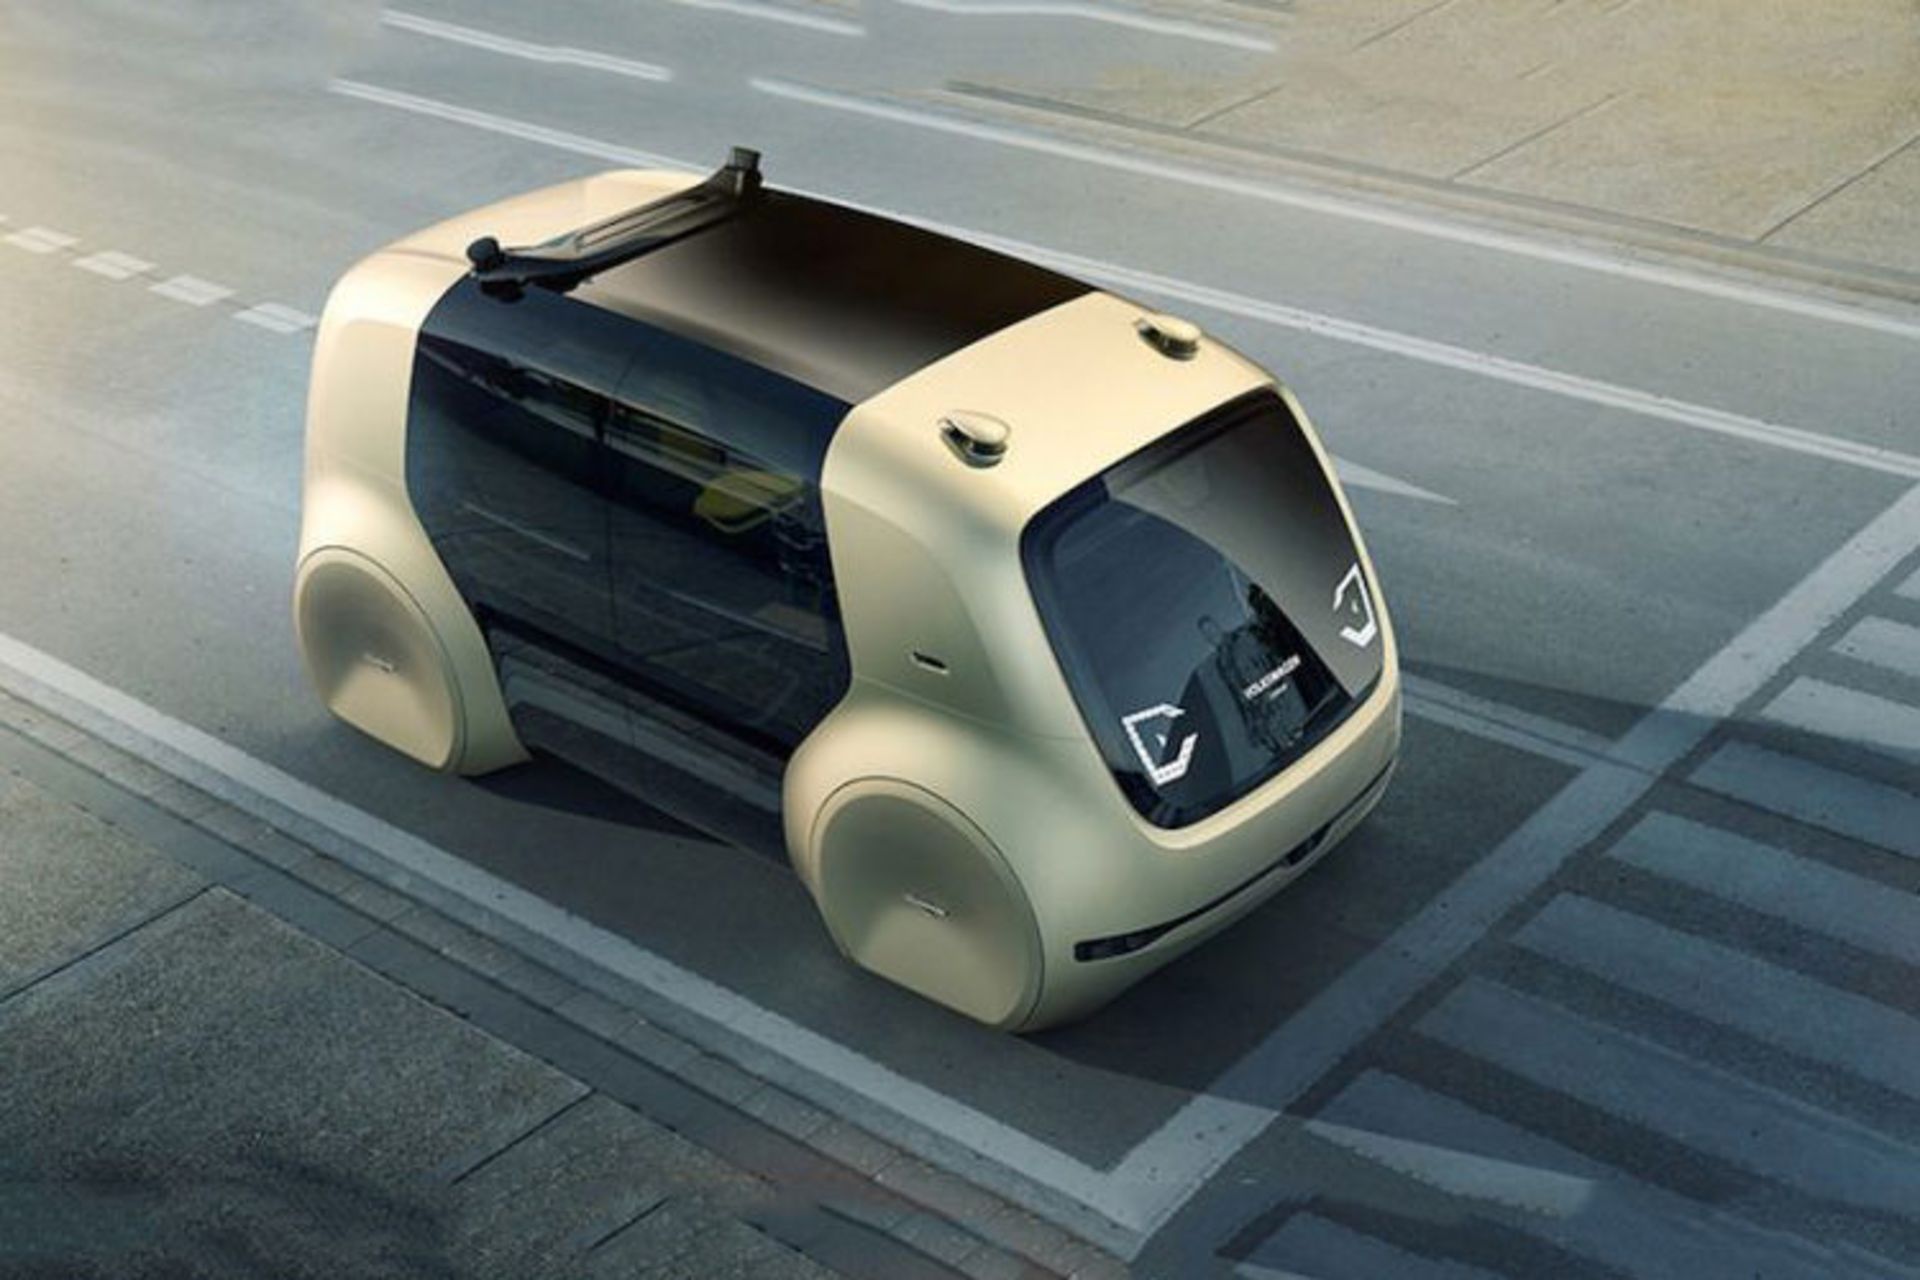 Volkswagen autonomous electric car / فولکس‌واگن خودروی الکتریکی خودران